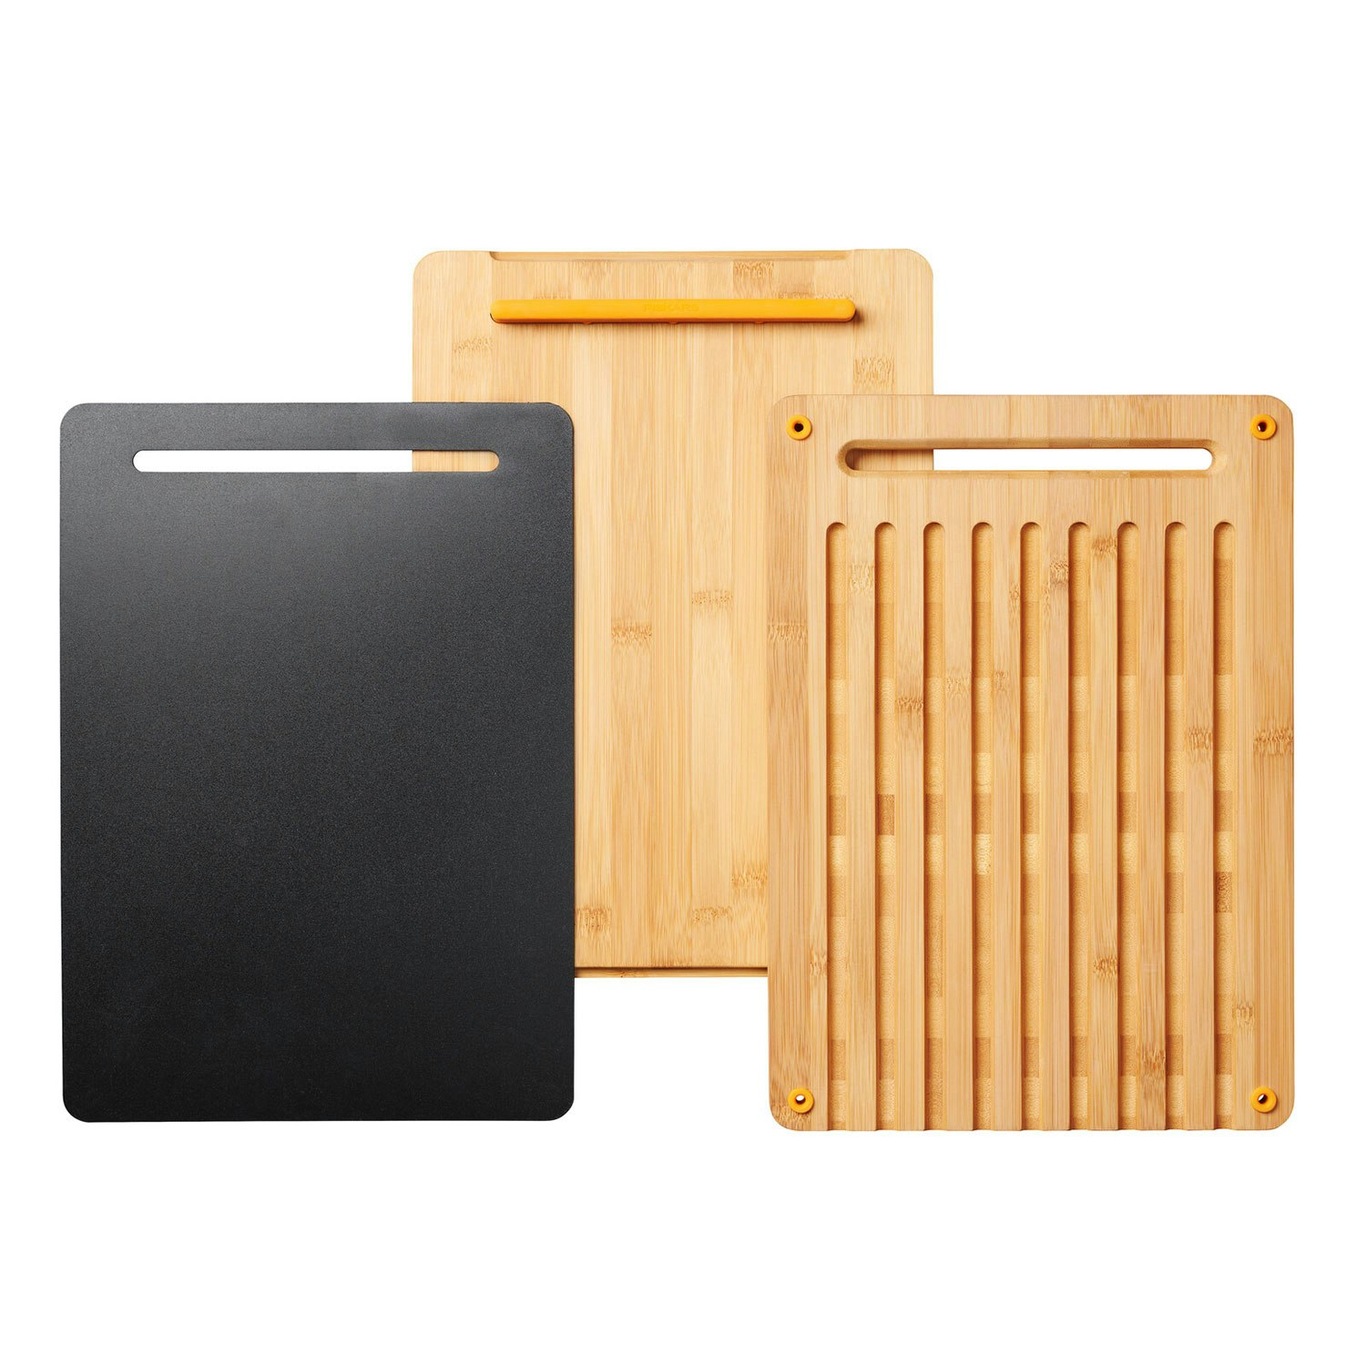 https://royaldesign.com/image/2/fiskars-functional-form-cutting-boards-3-pack-0?w=800&quality=80